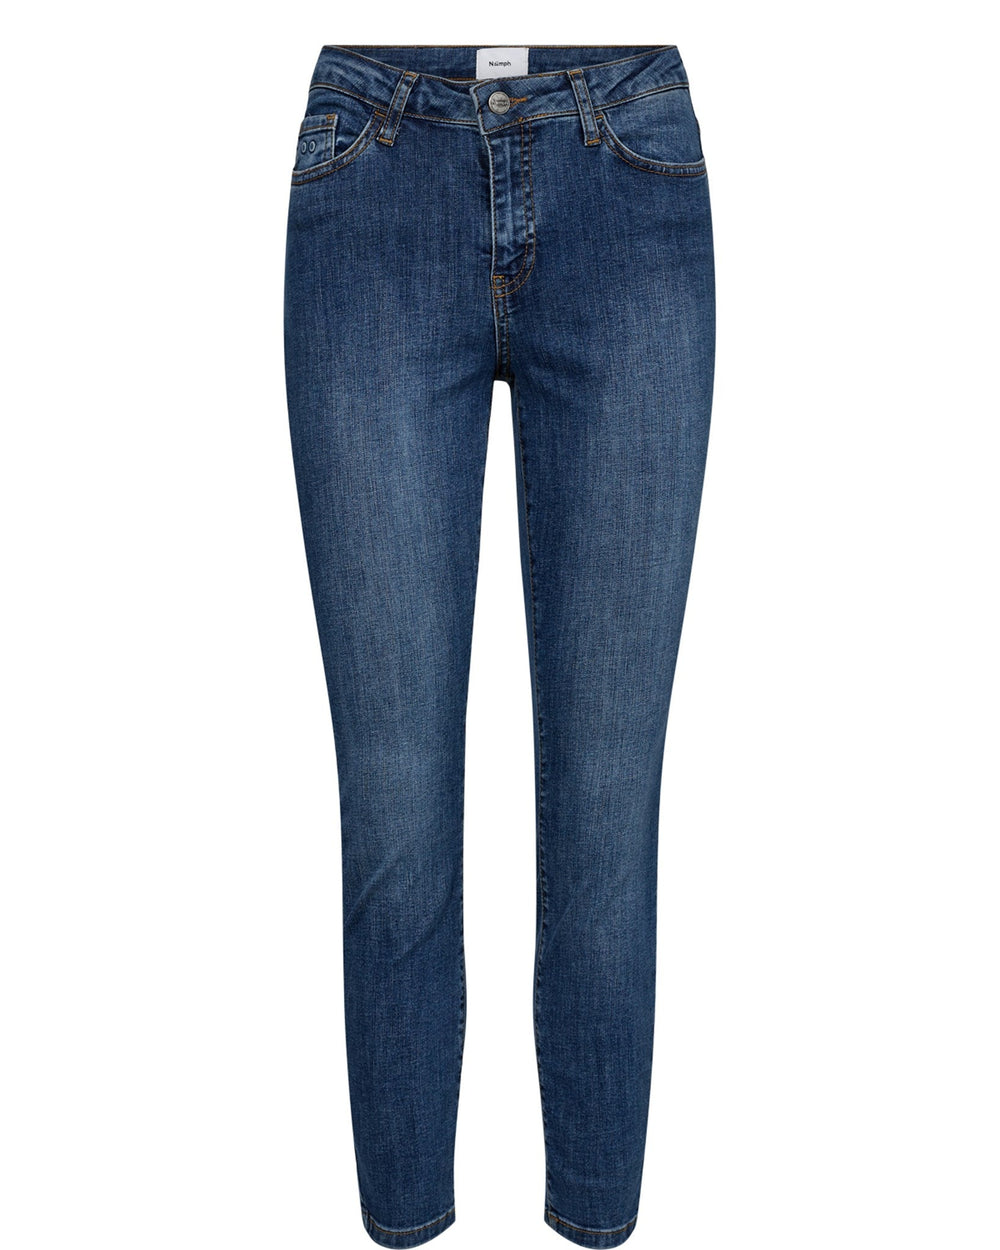 NUSIDNEY Medium Blue Denim Cropped Jeans